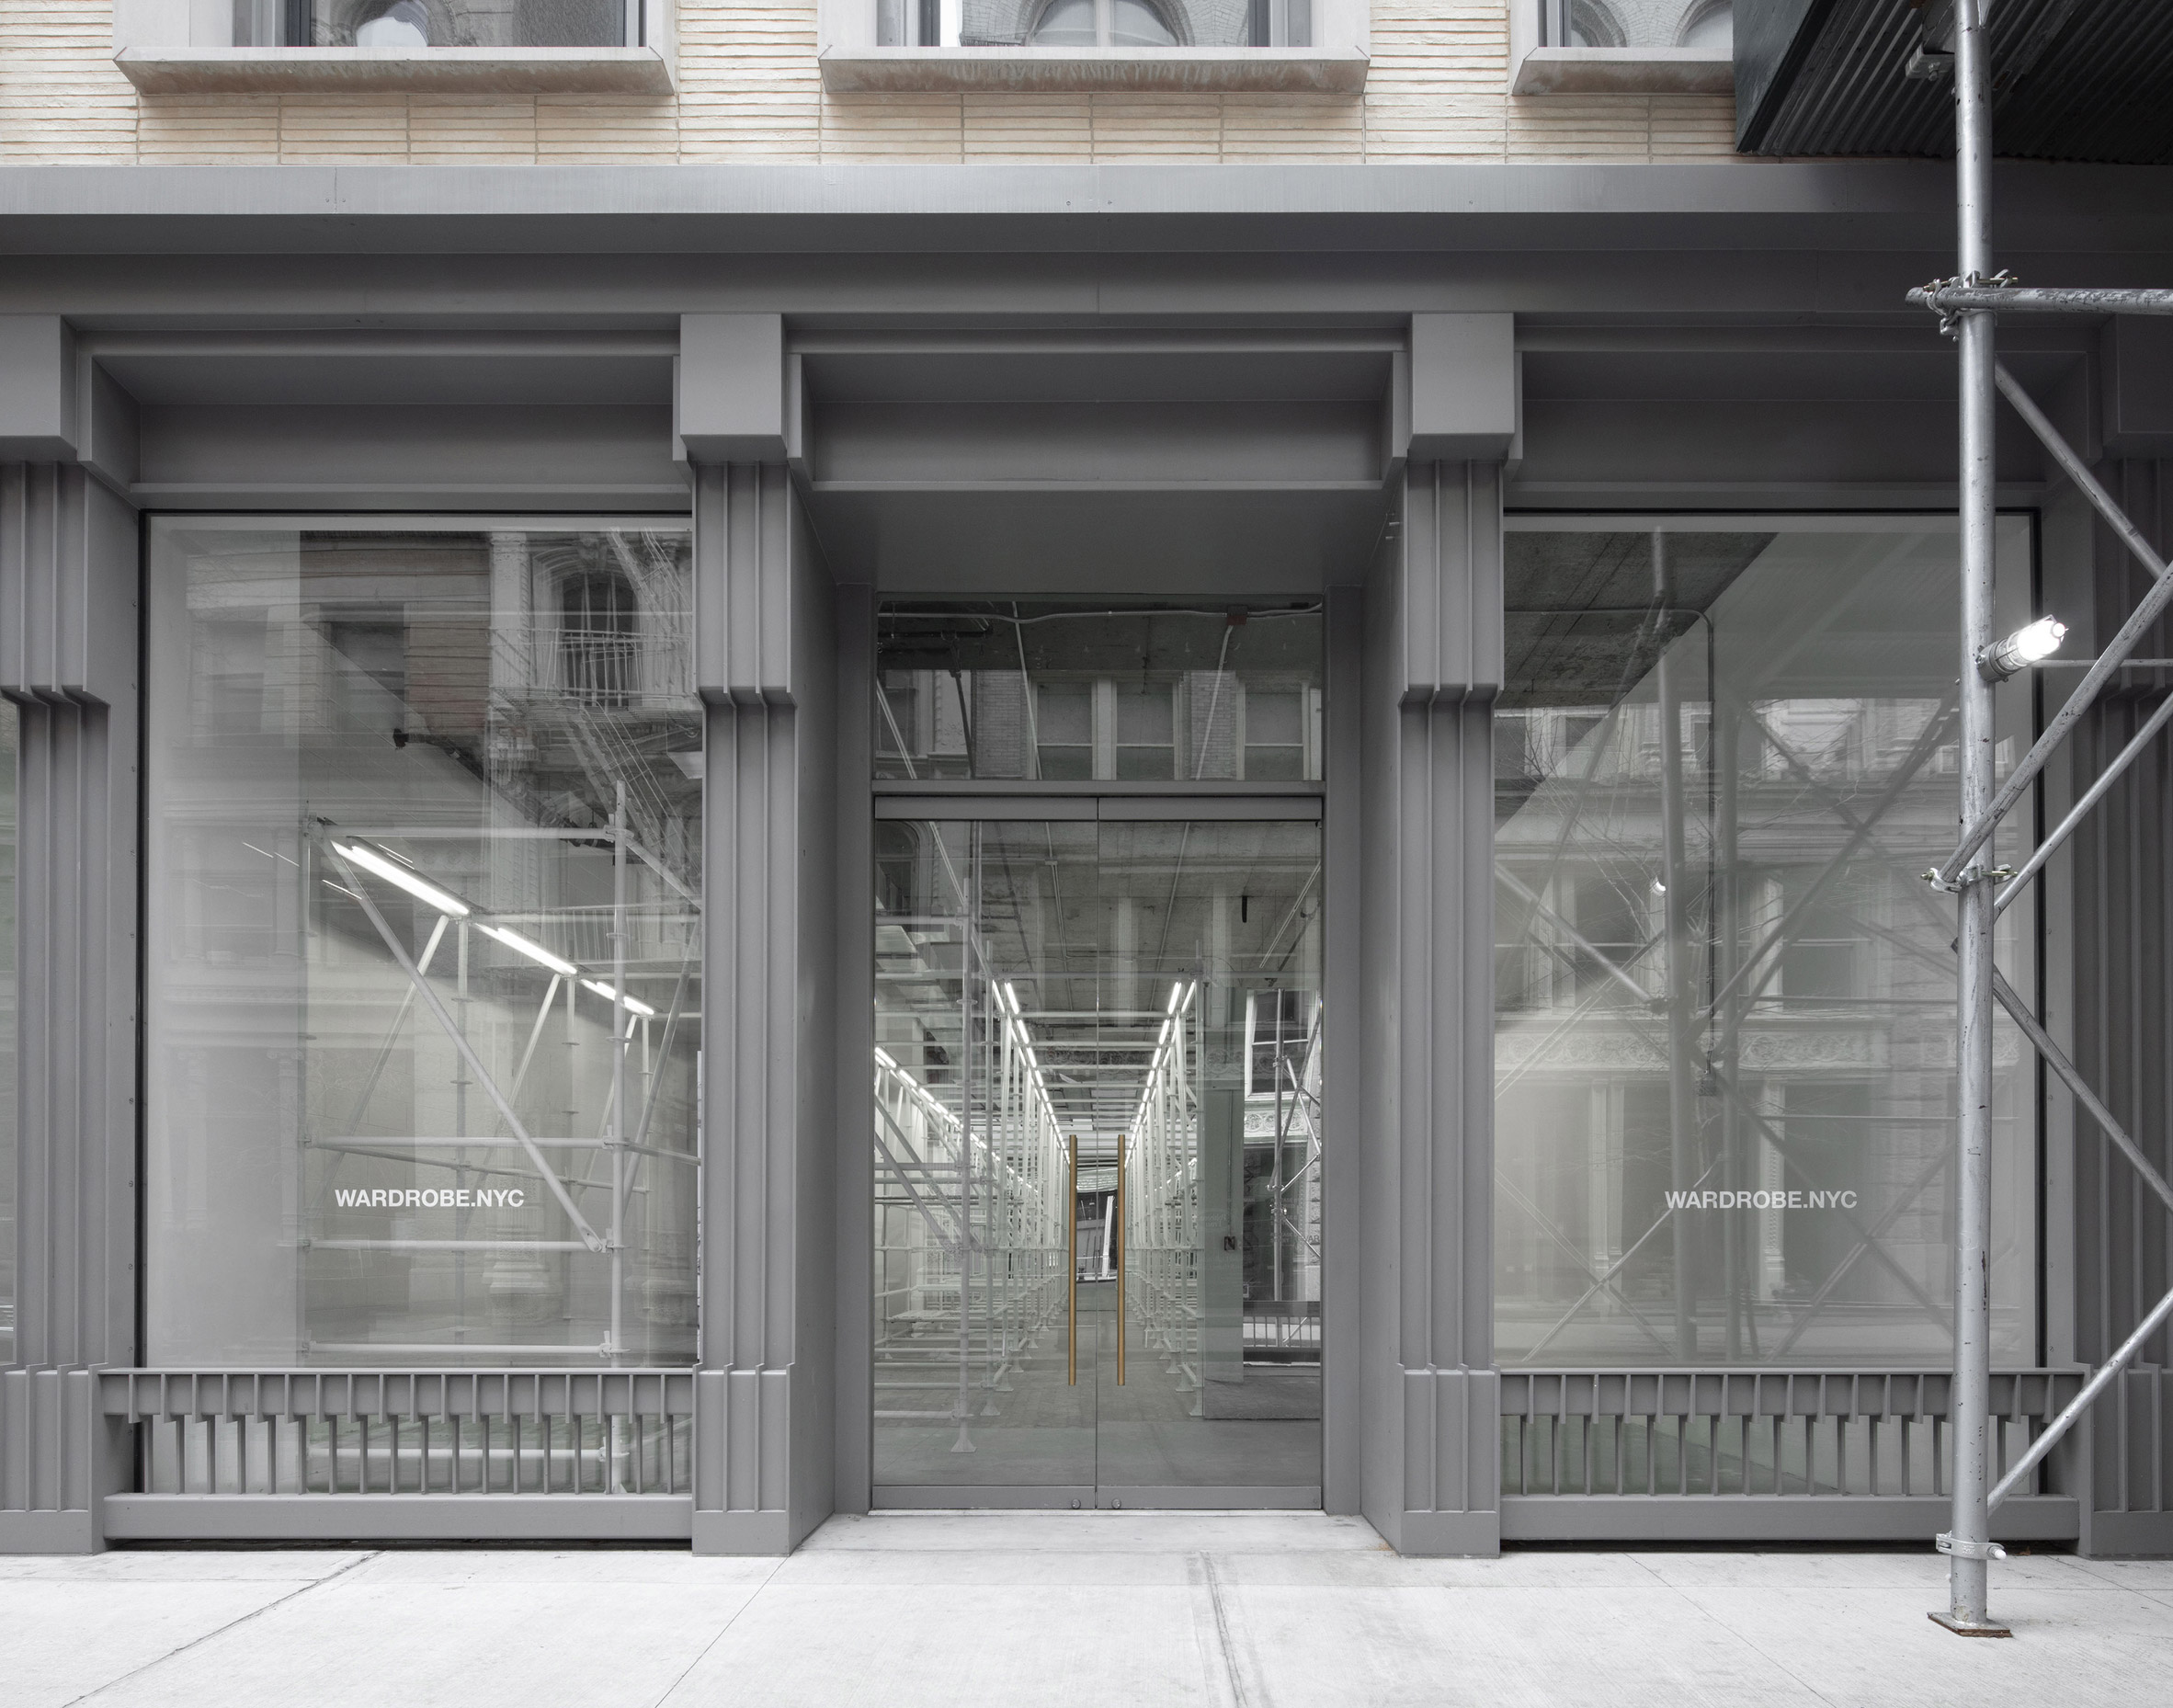 White scaffolding fills interior of Wardrobe NYC boutique by Jordana Maisie